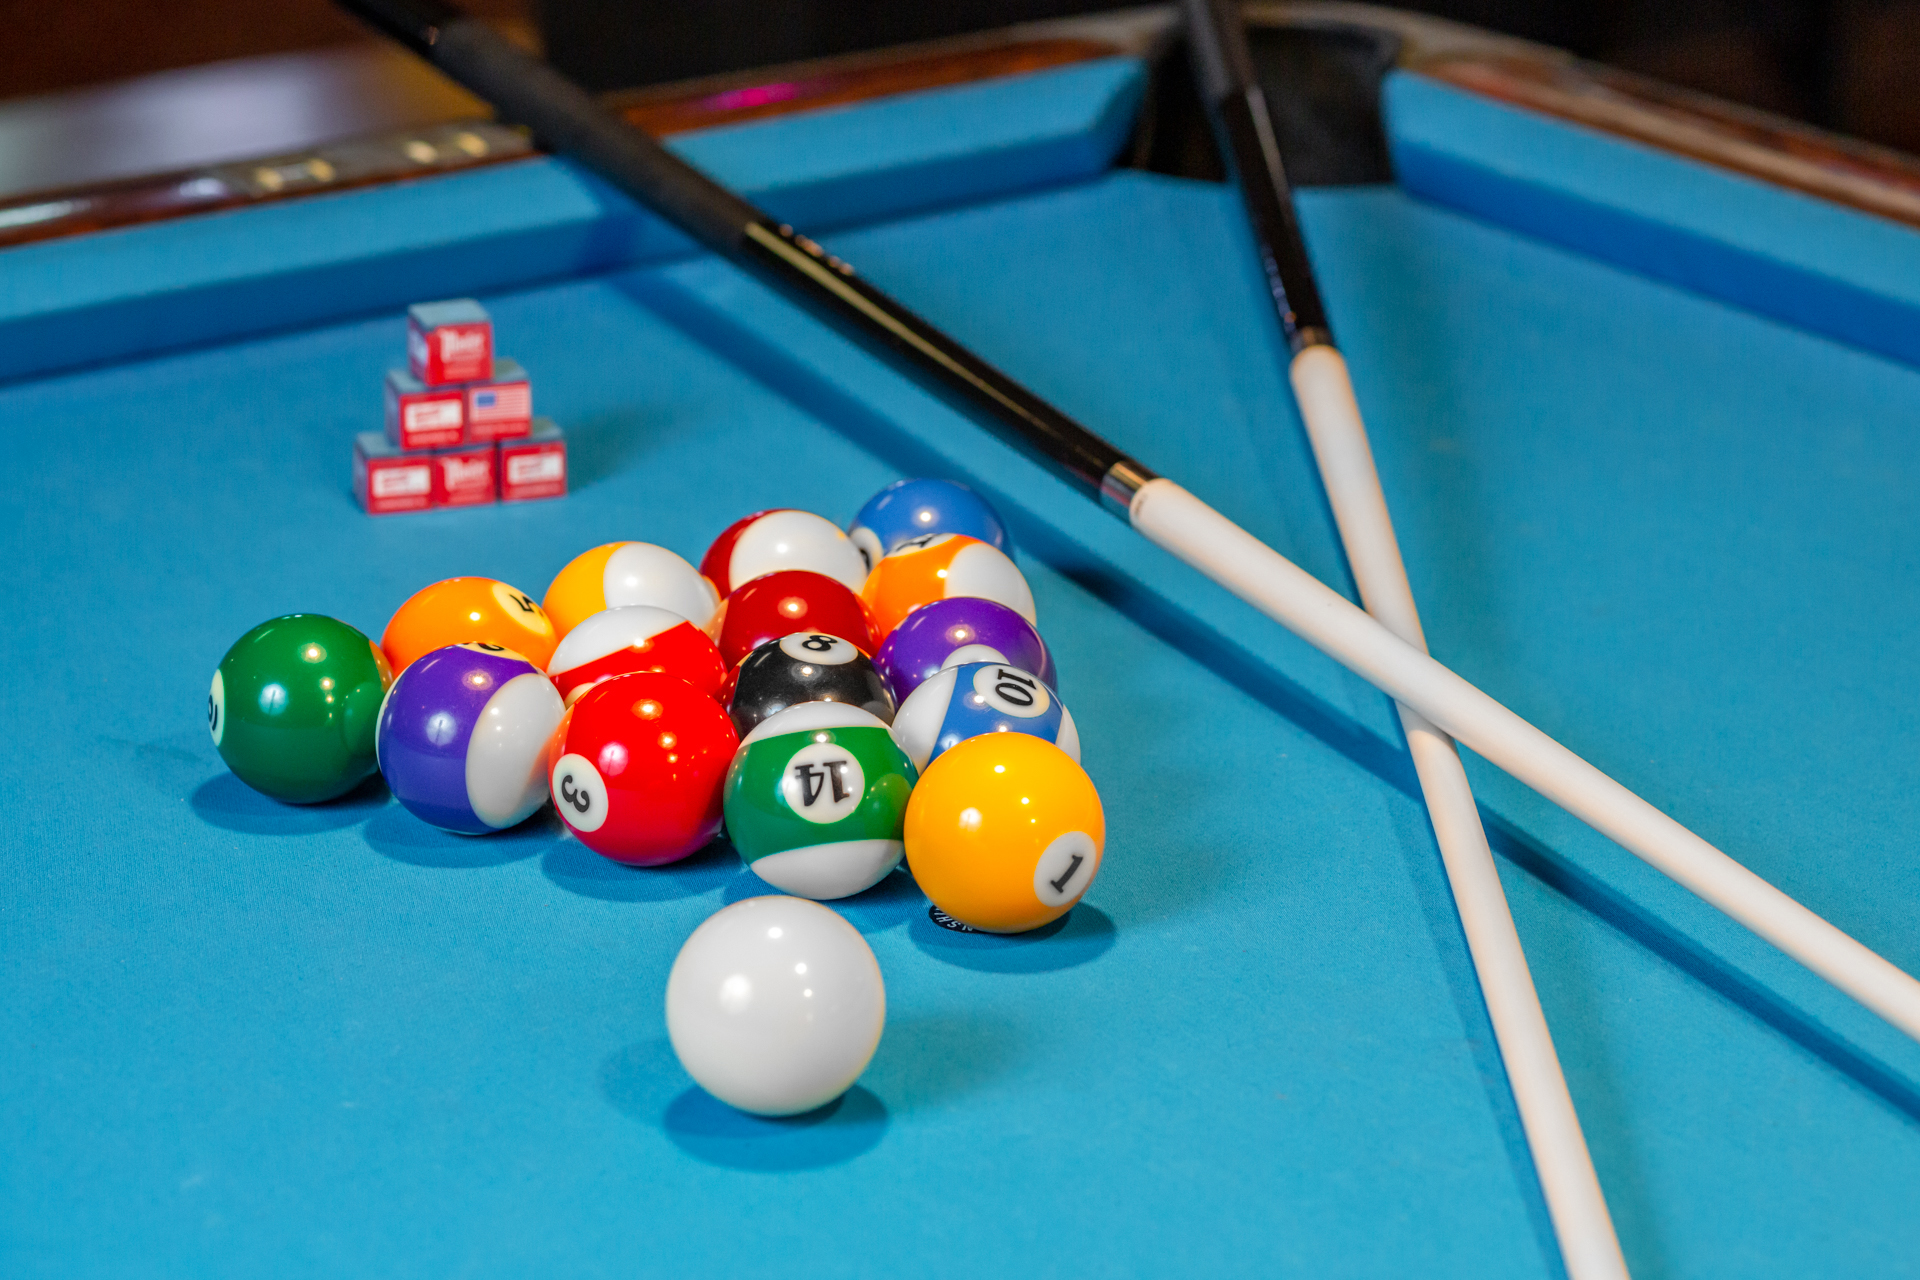 CLICKS Billiards - Billiards, Games, Sports, Bar and Grill